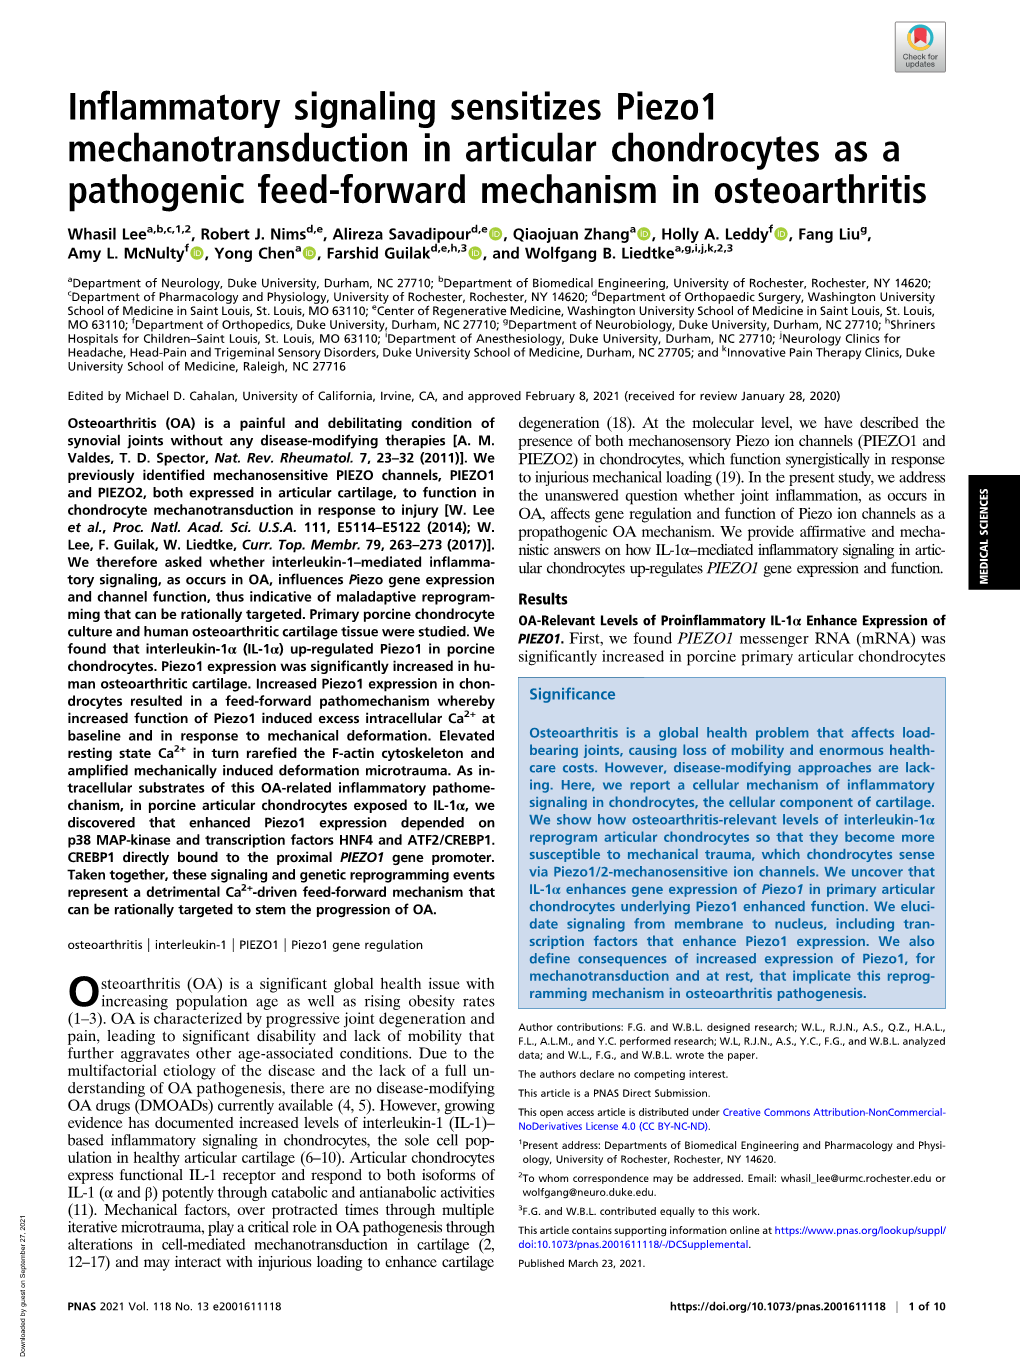 Inflammatory Signaling Sensitizes Piezo1 Mechanotransduction in Articular Chondrocytes As a Pathogenic Feed-Forward Mechanism in Osteoarthritis